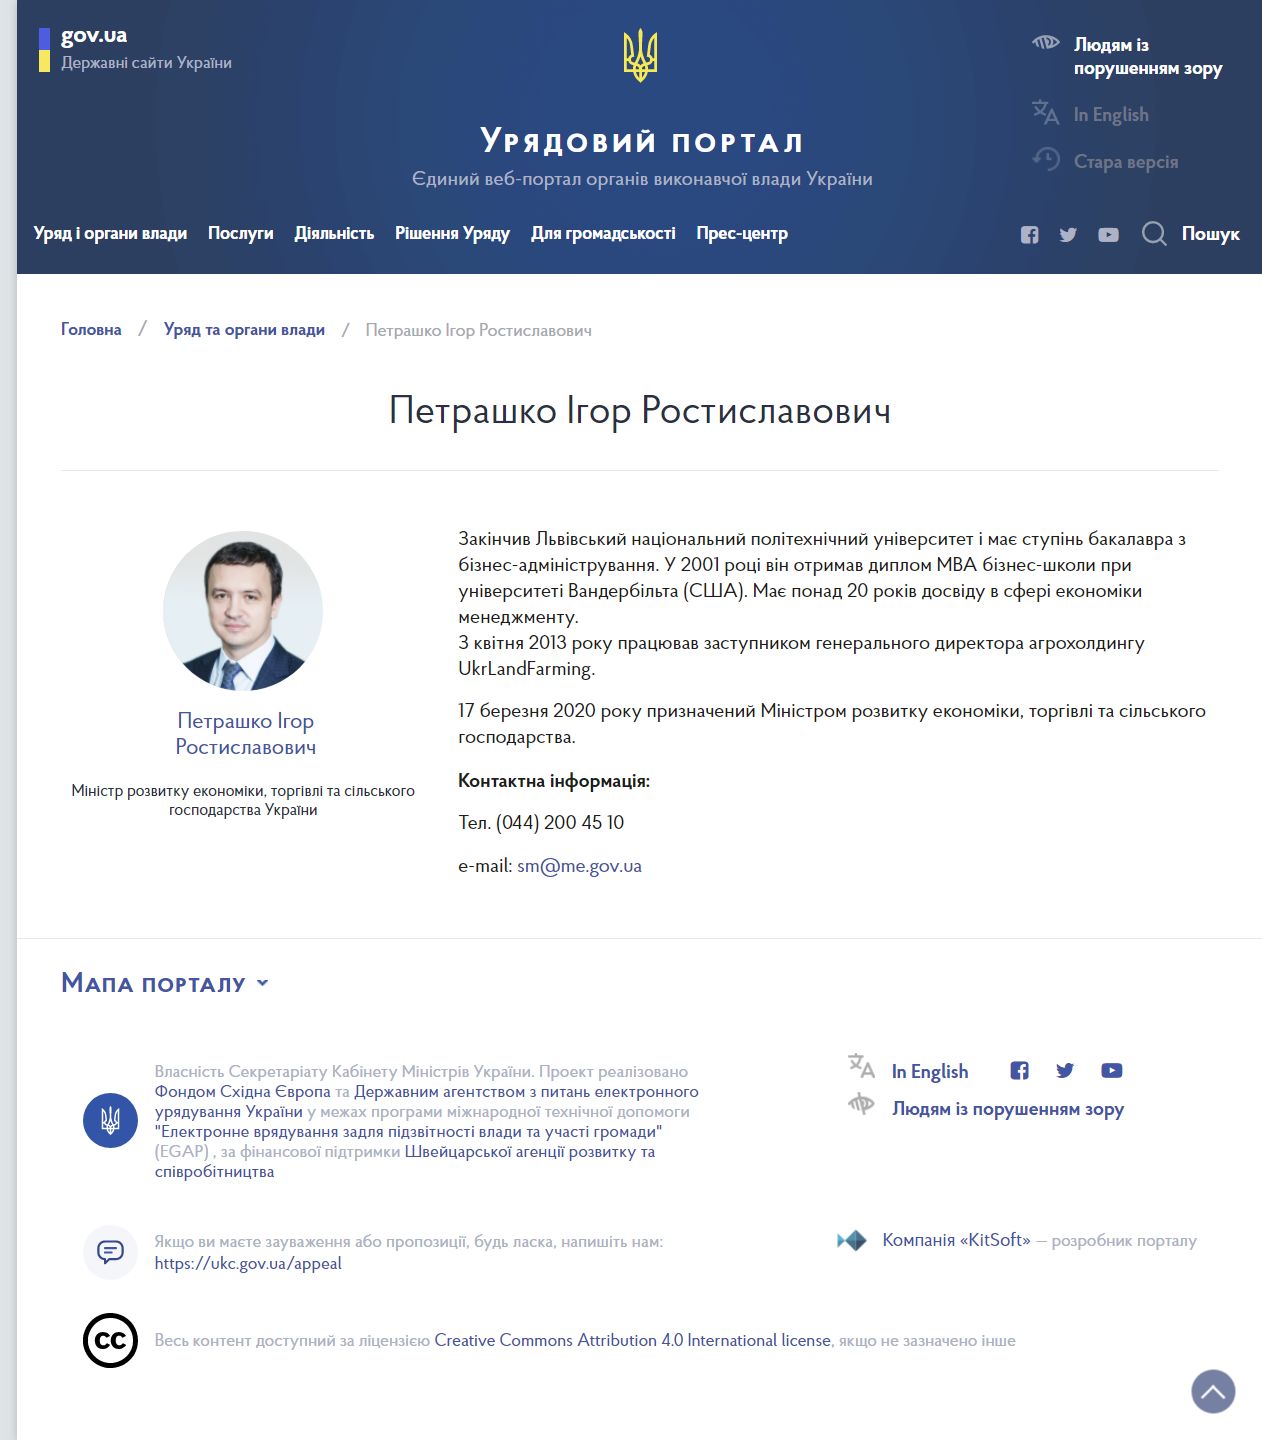 https://www.kmu.gov.ua/profile/igor-petrashko